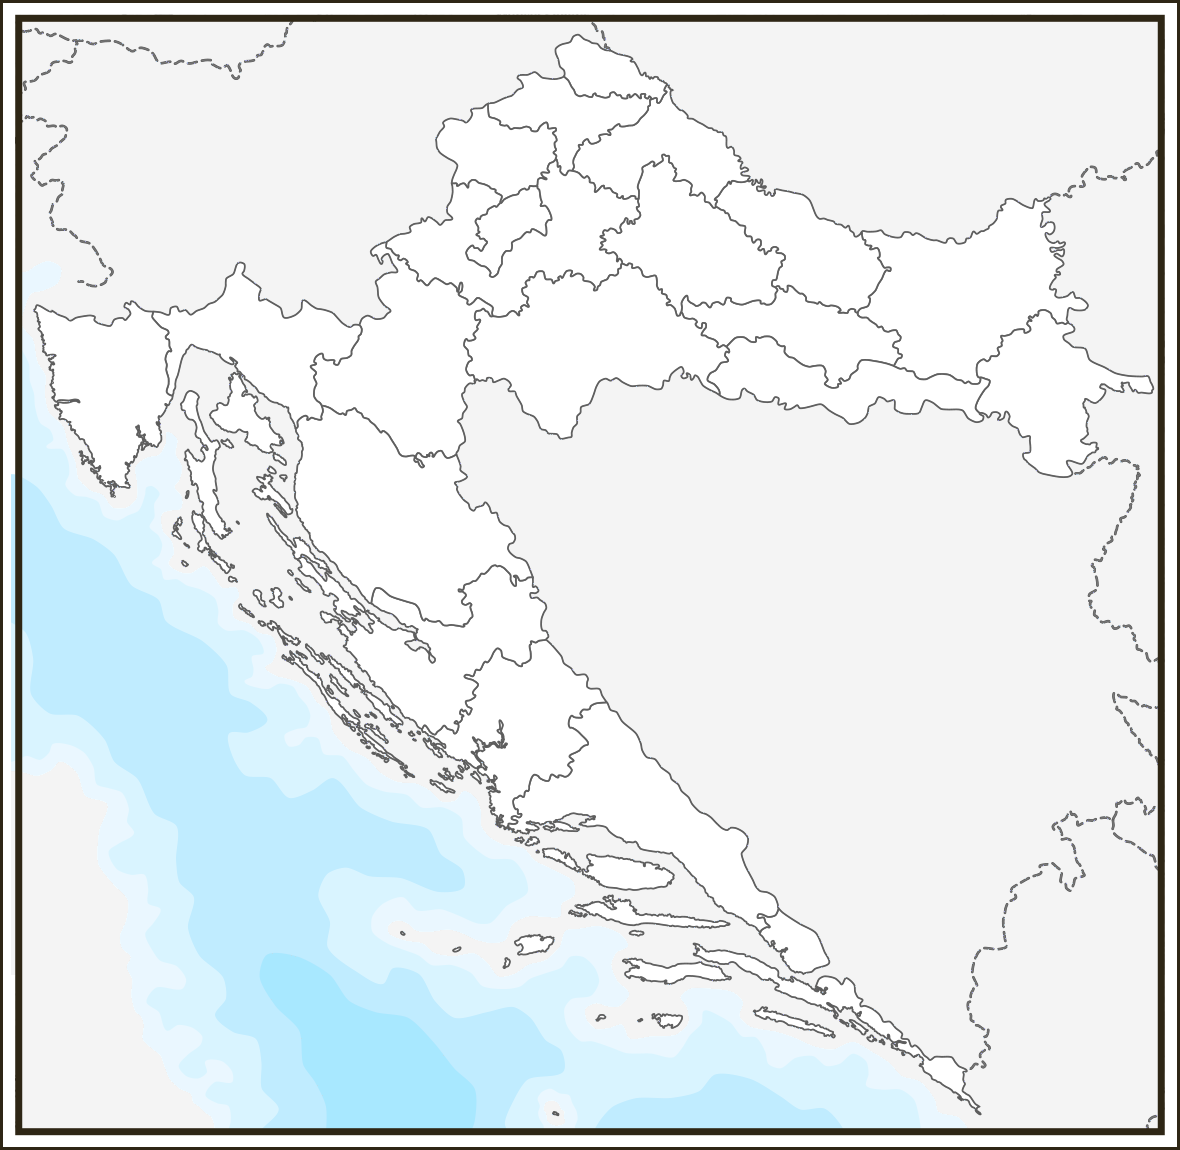 Mapa Hrvatske